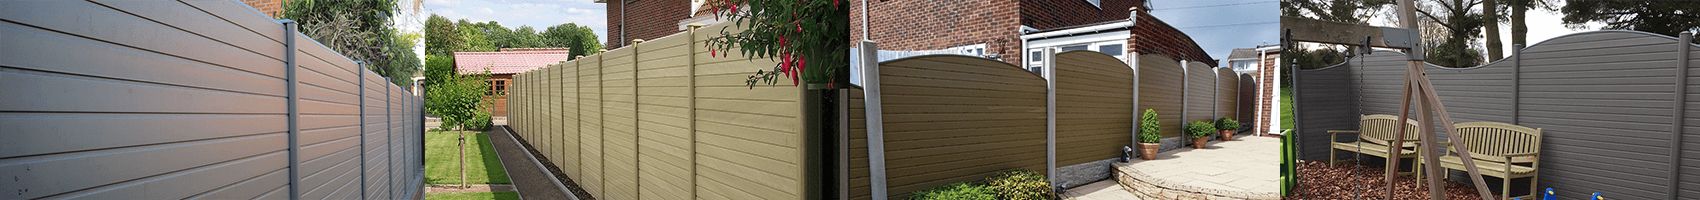 300mm PVC Composite Fence Panel Graphite 2438mm